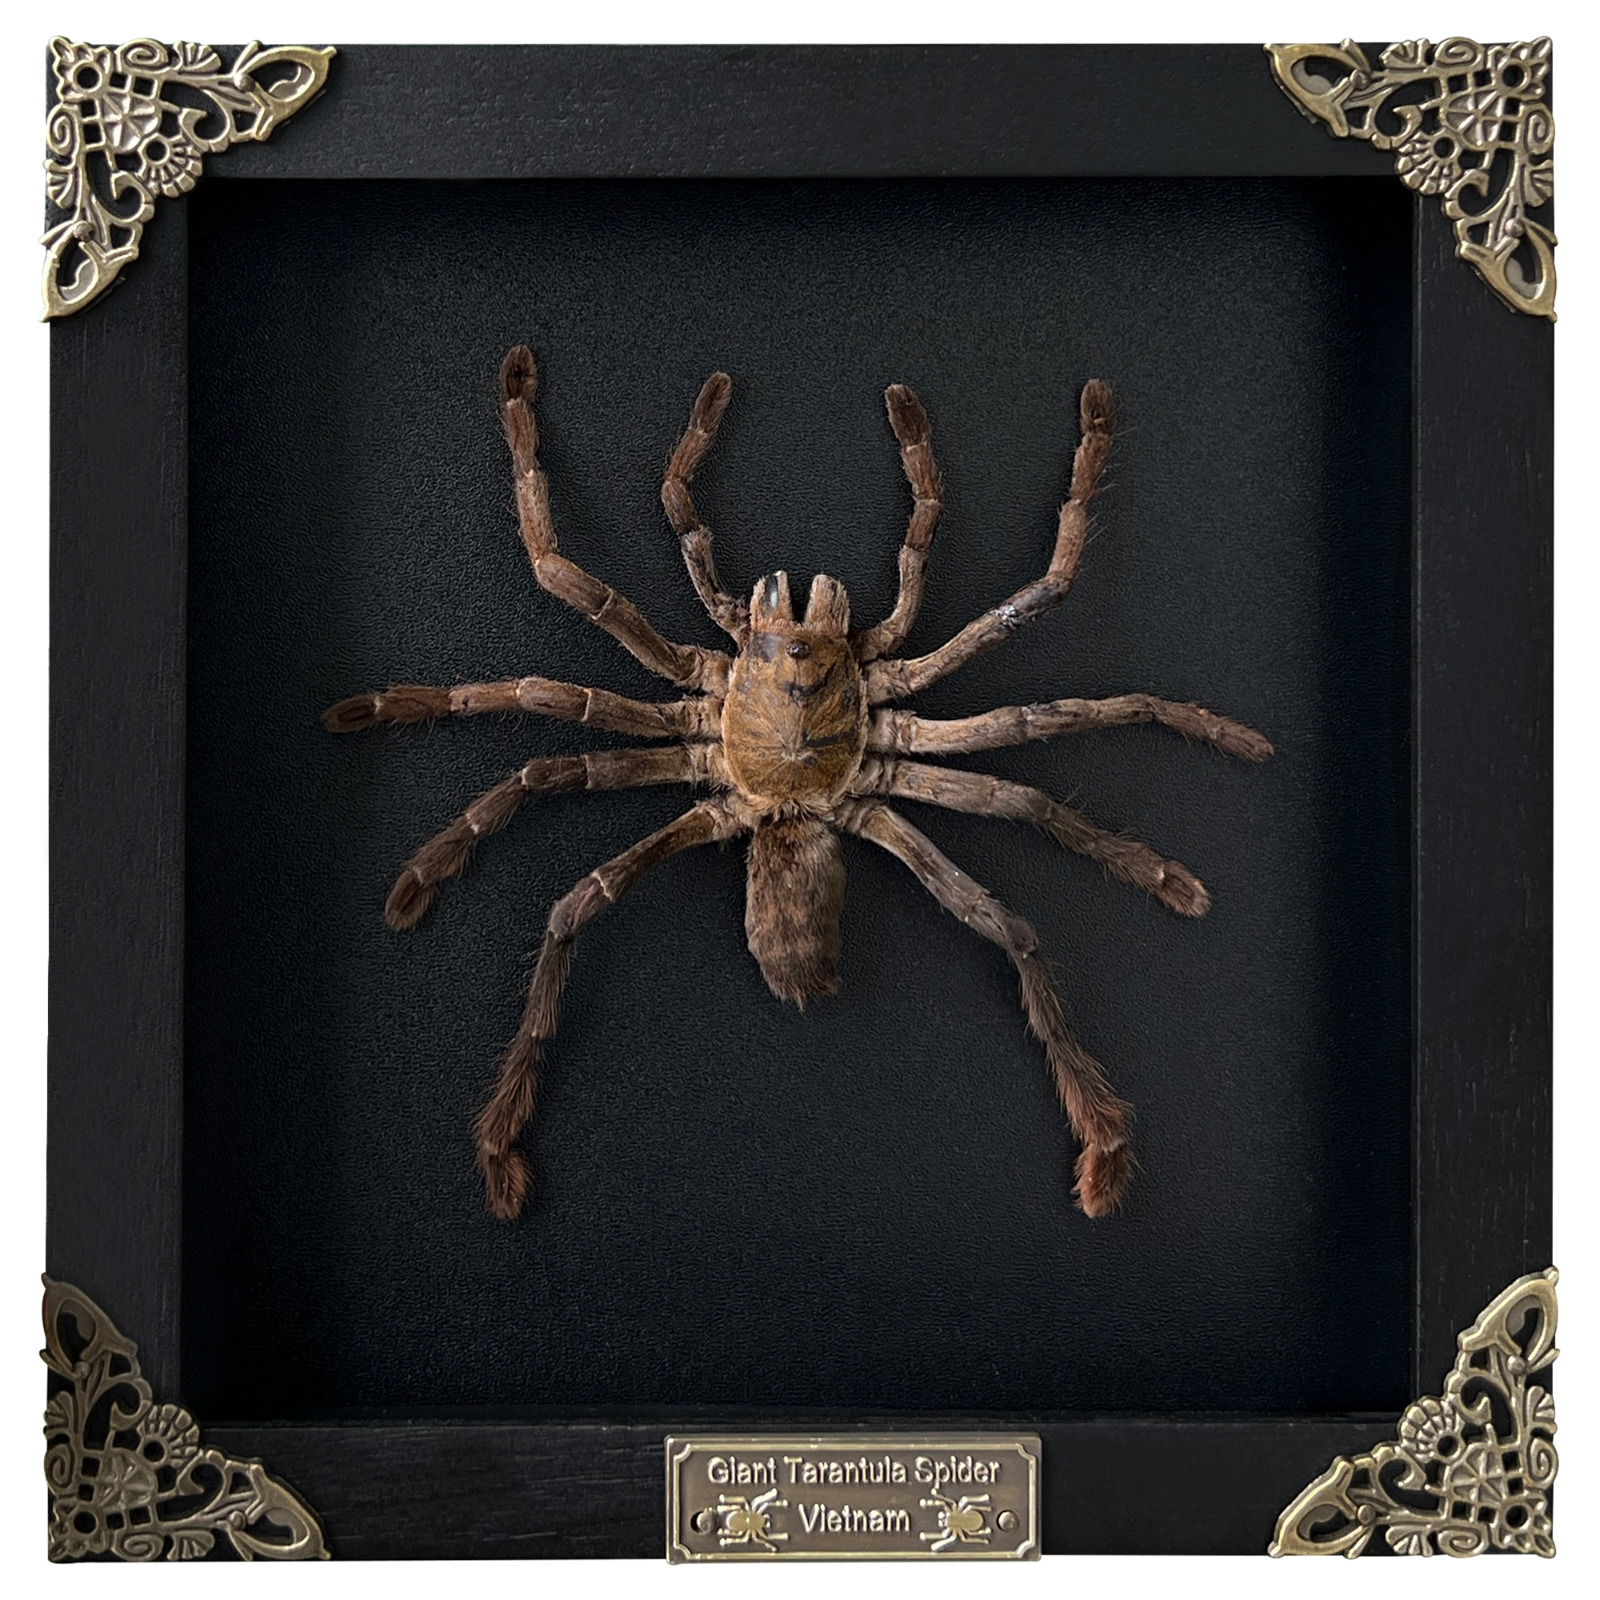 Real Framed Spider Tarantula Insect Bug Taxidermy Black Shadow Box Gothic Decor